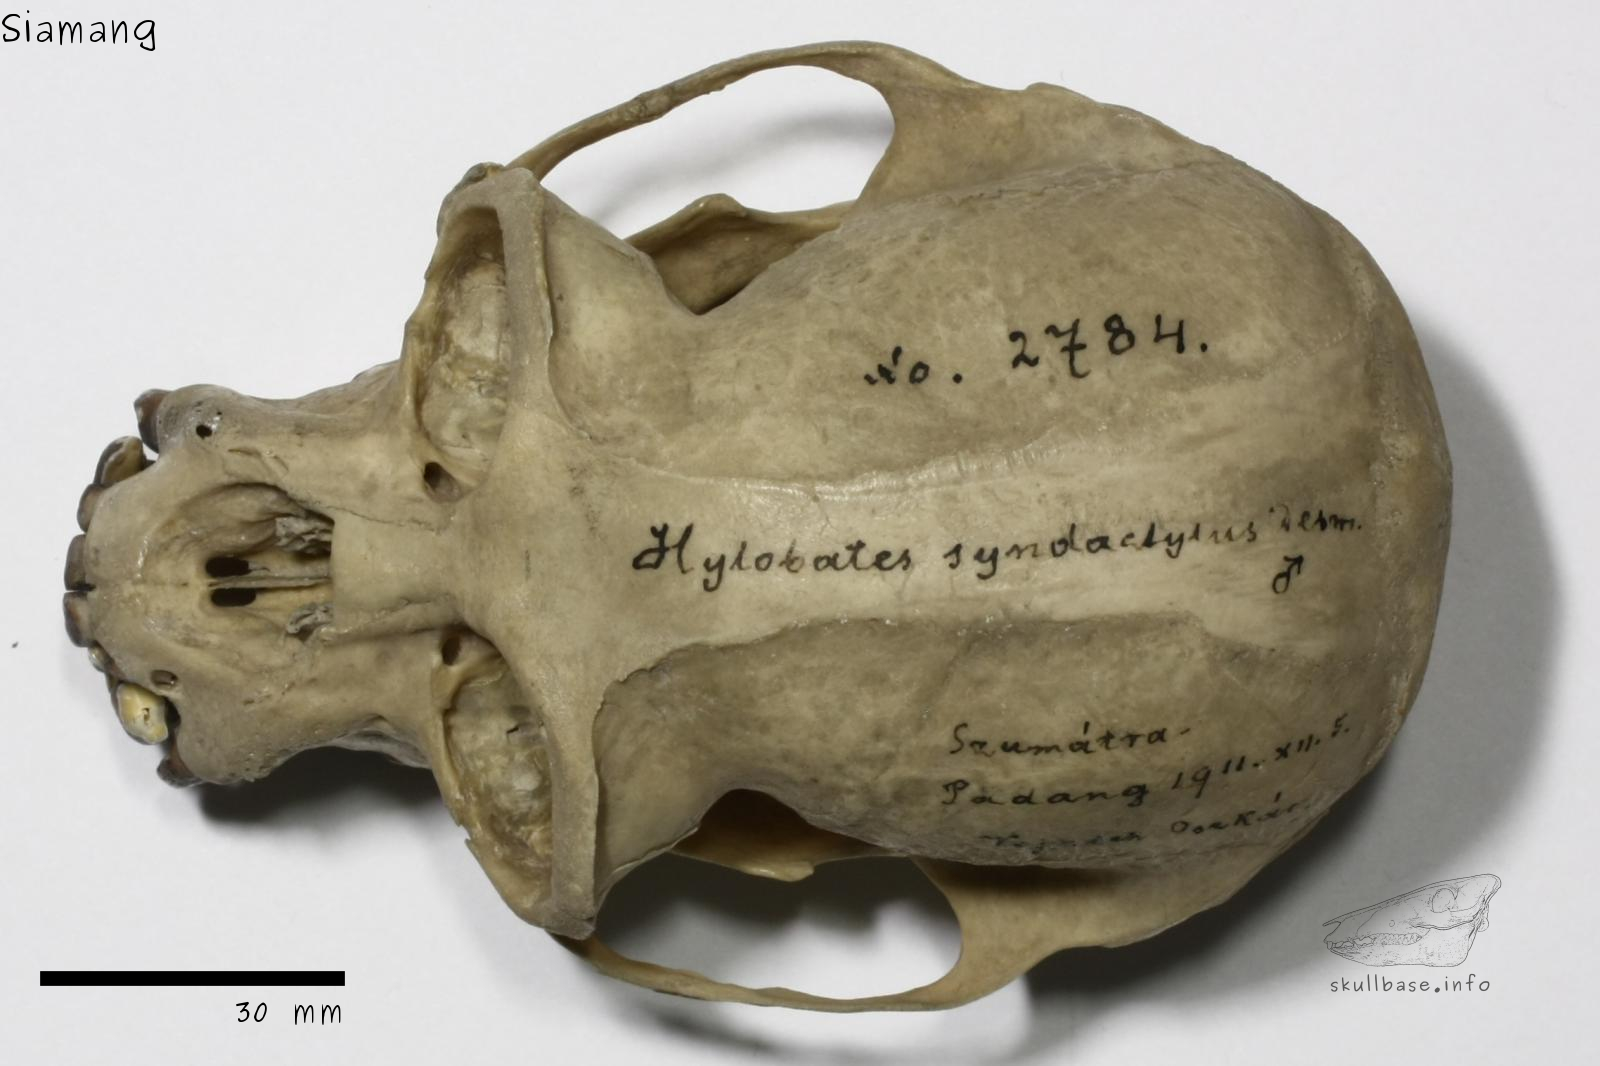 Siamang (Symphalangus syndactylus) skull dorsal view